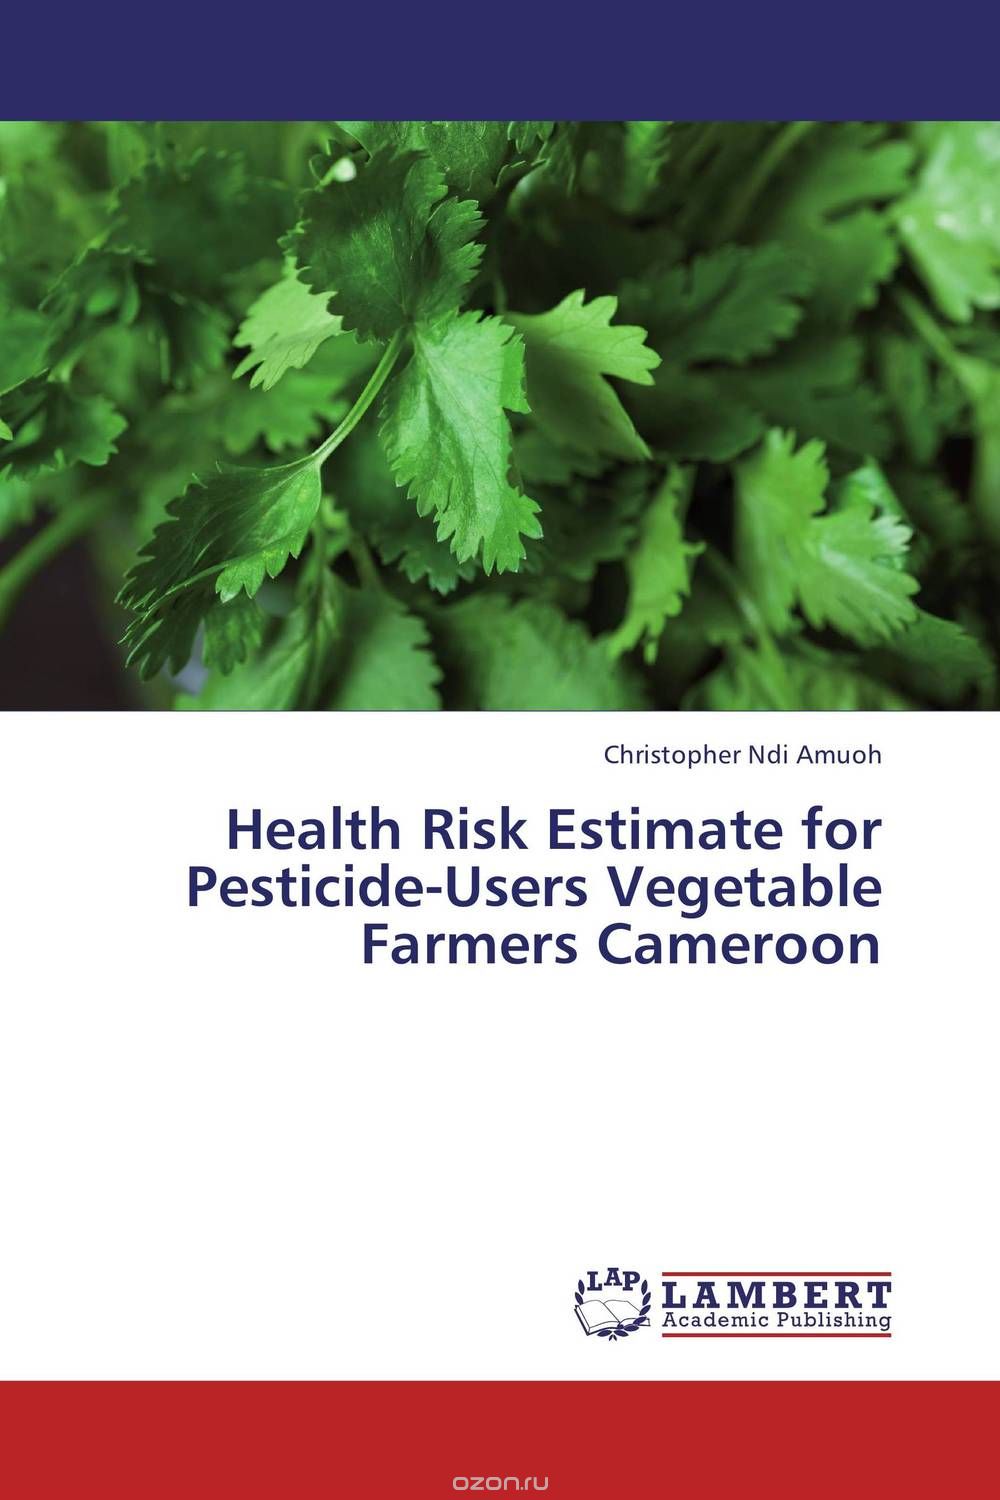 Скачать книгу "Health Risk Estimate for Pesticide-Users Vegetable Farmers Cameroon"